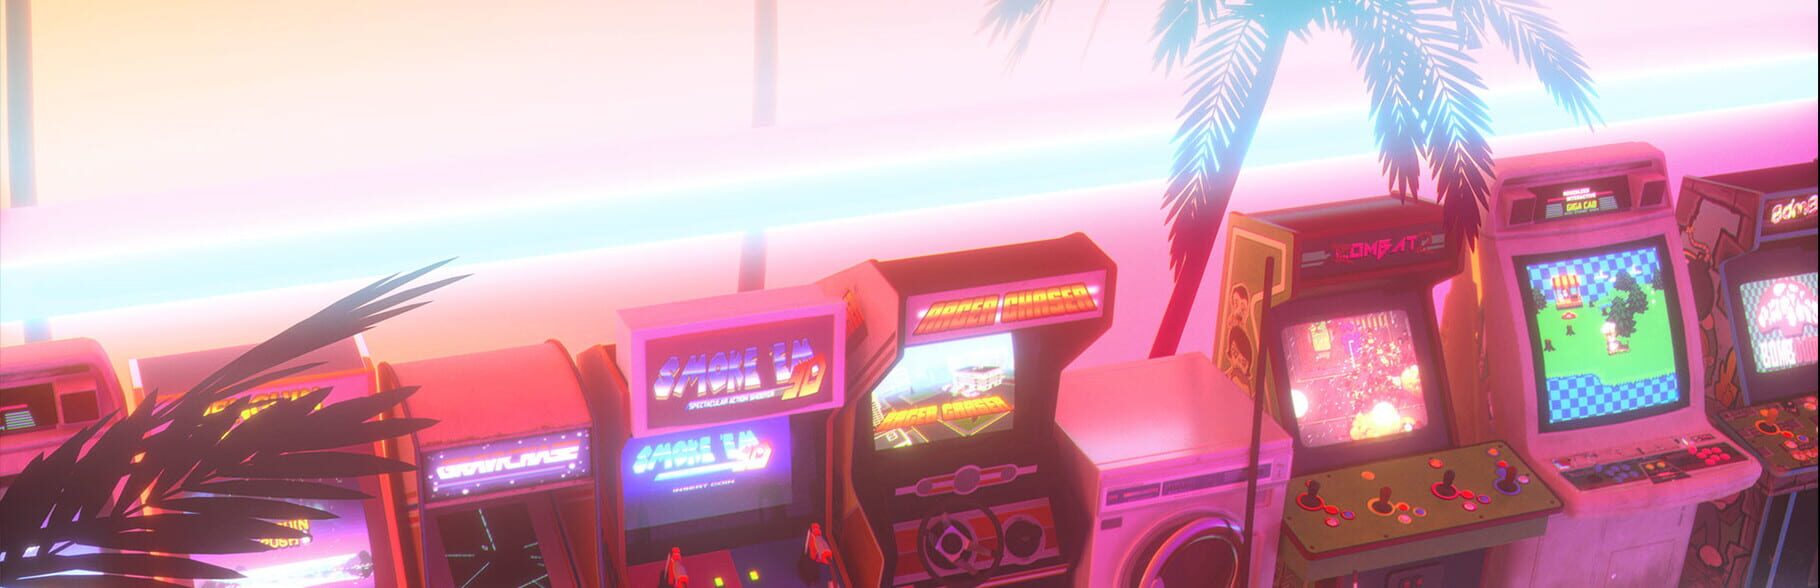 Arcade Paradise artwork